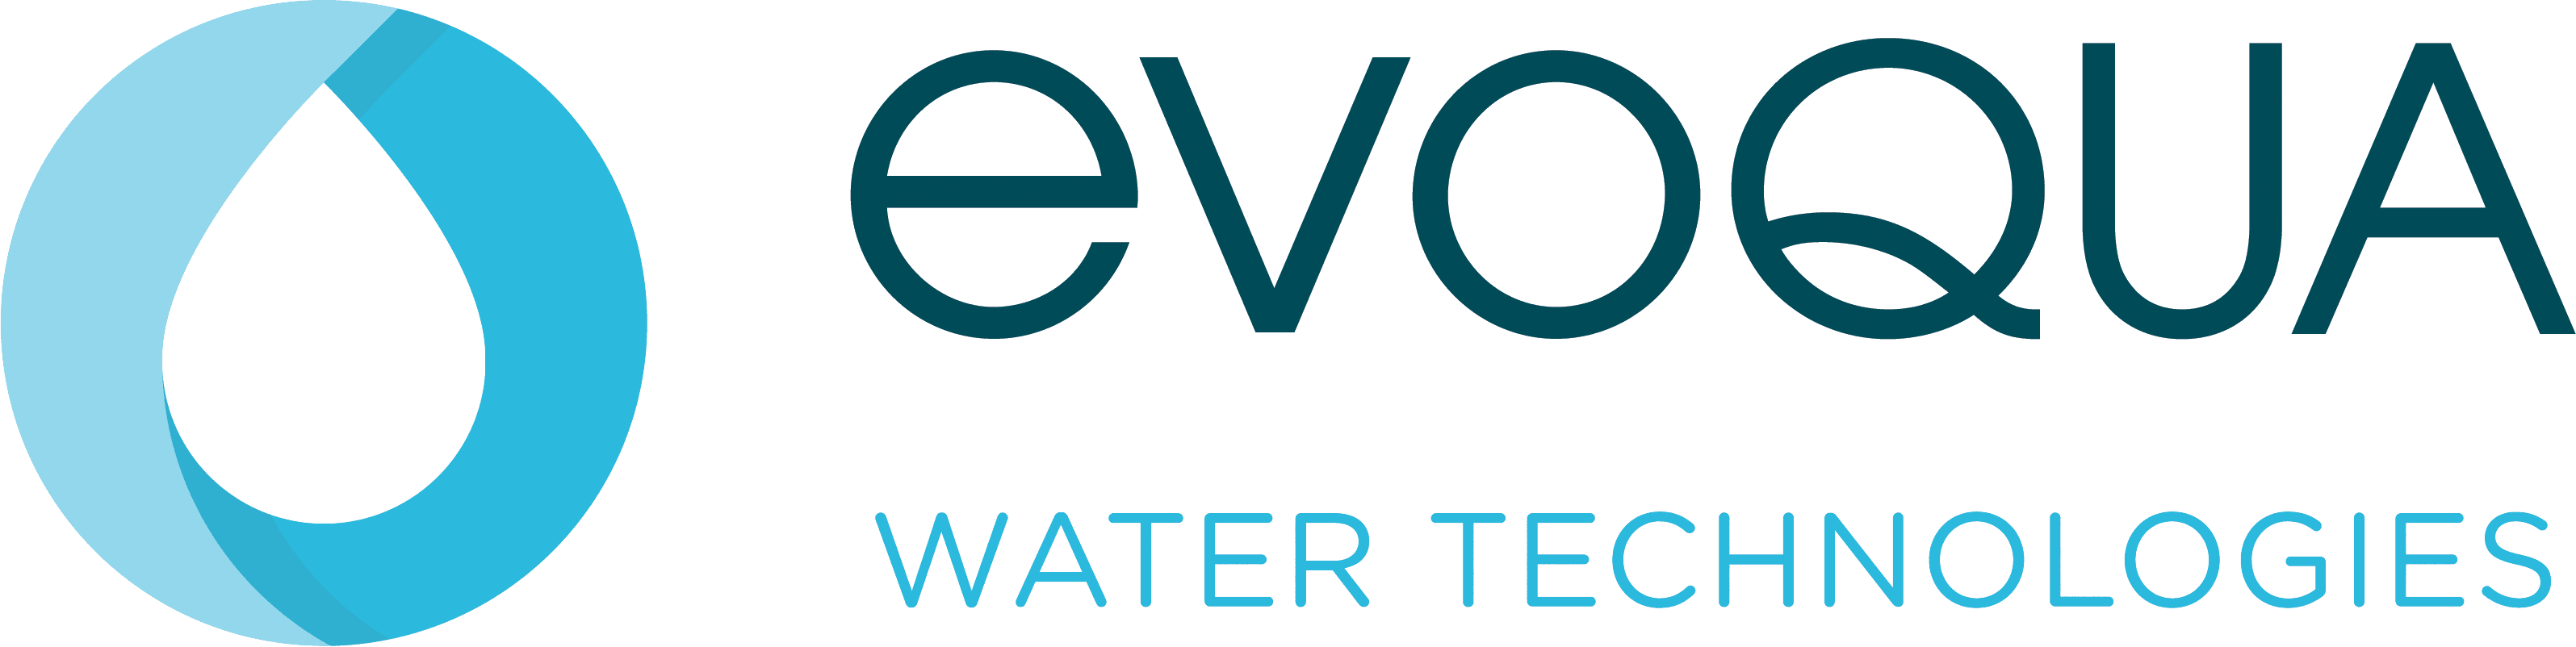 Evoqua Water Technologies (now part of Xylem)